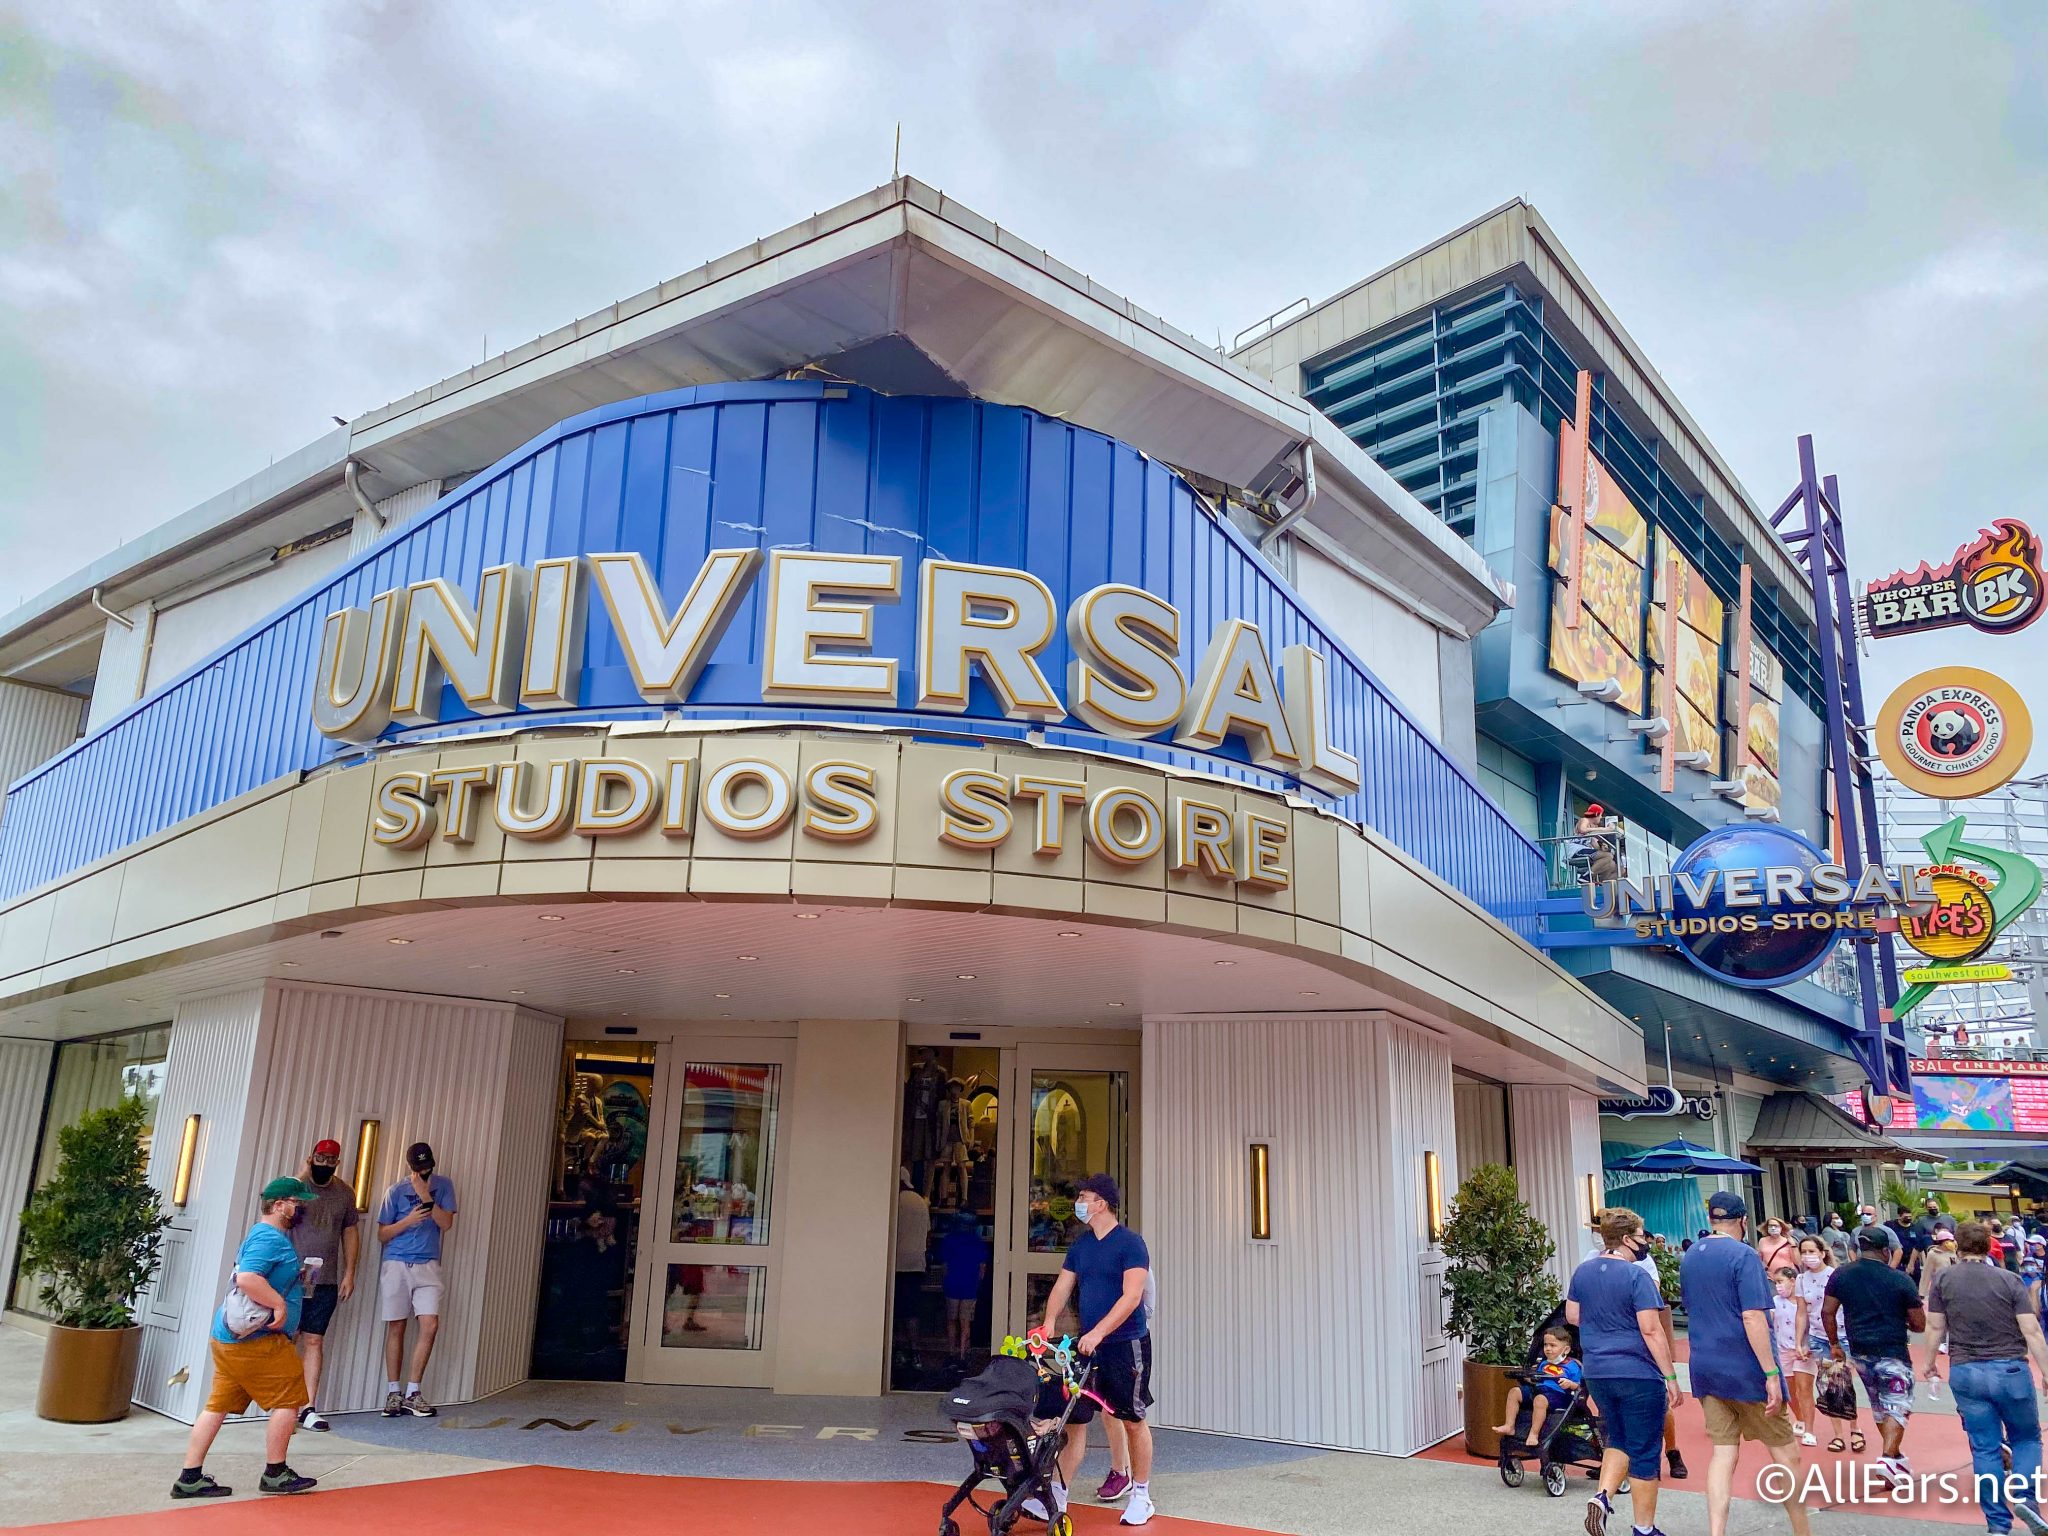 PHOTOS: New Universal Studios Store Opens Up at Universal Orlando